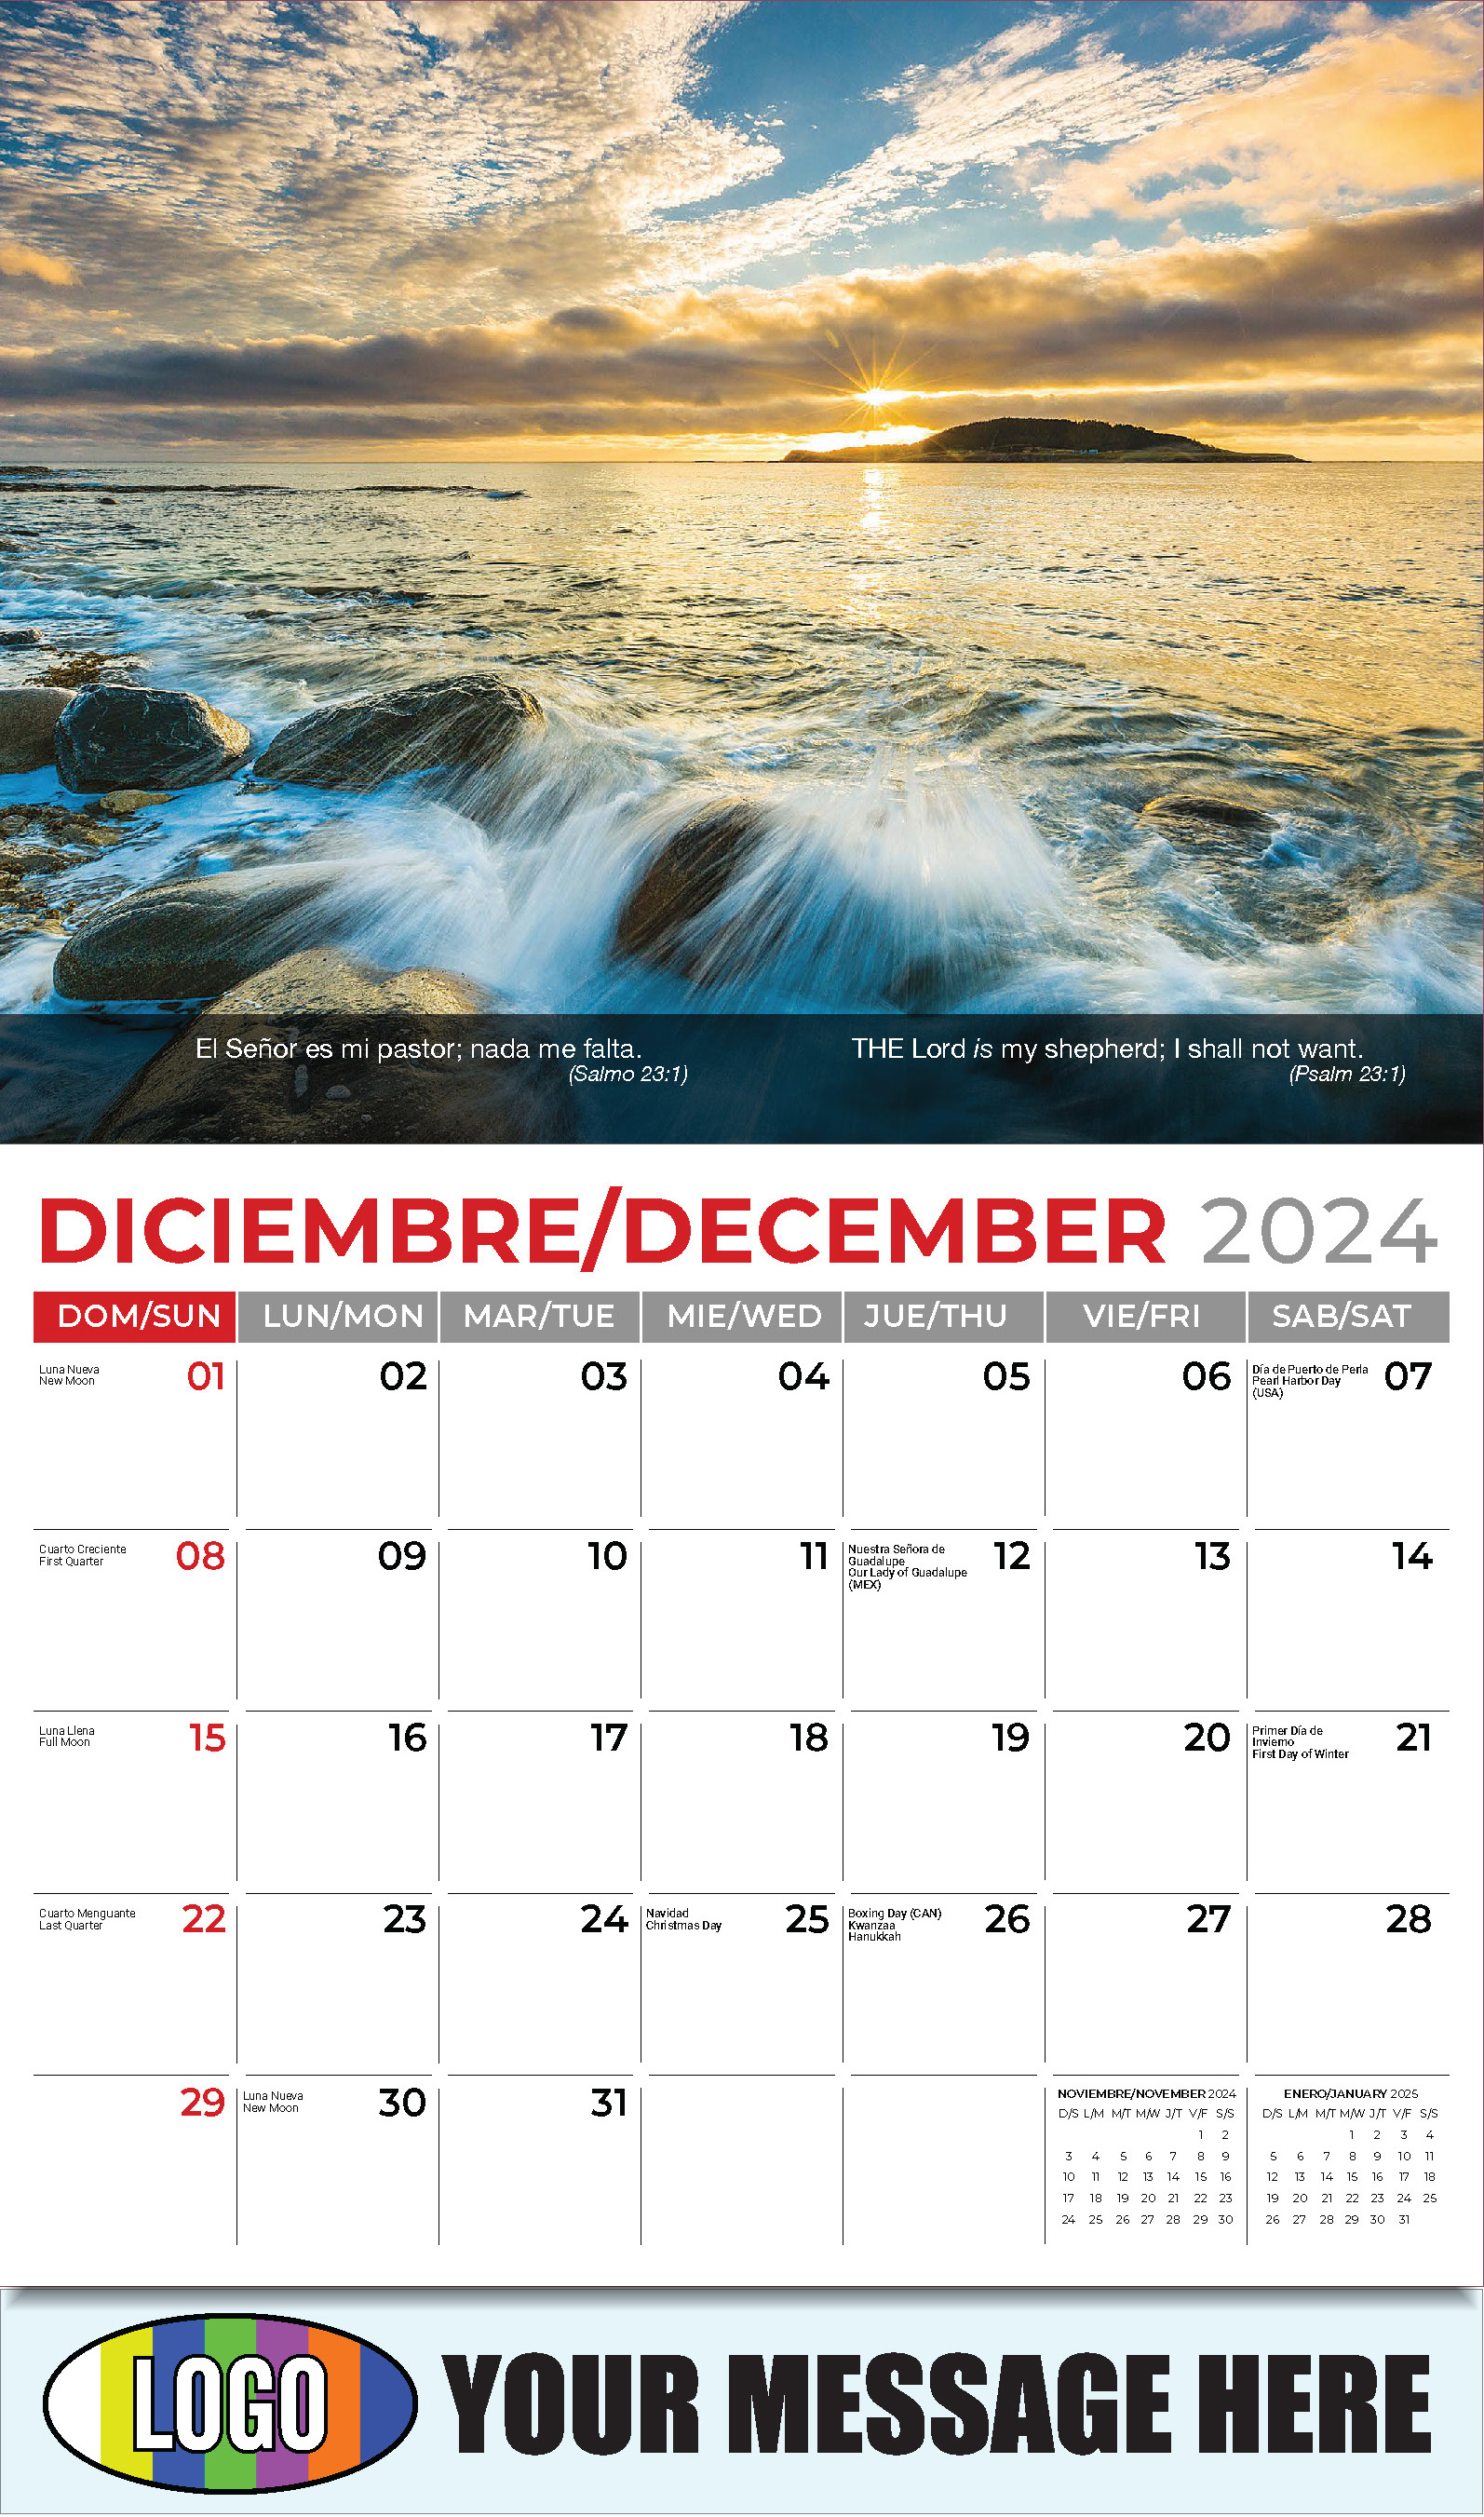 Faith Passages Bilingual 2025 Christian Business Advertising Calendar - December_a